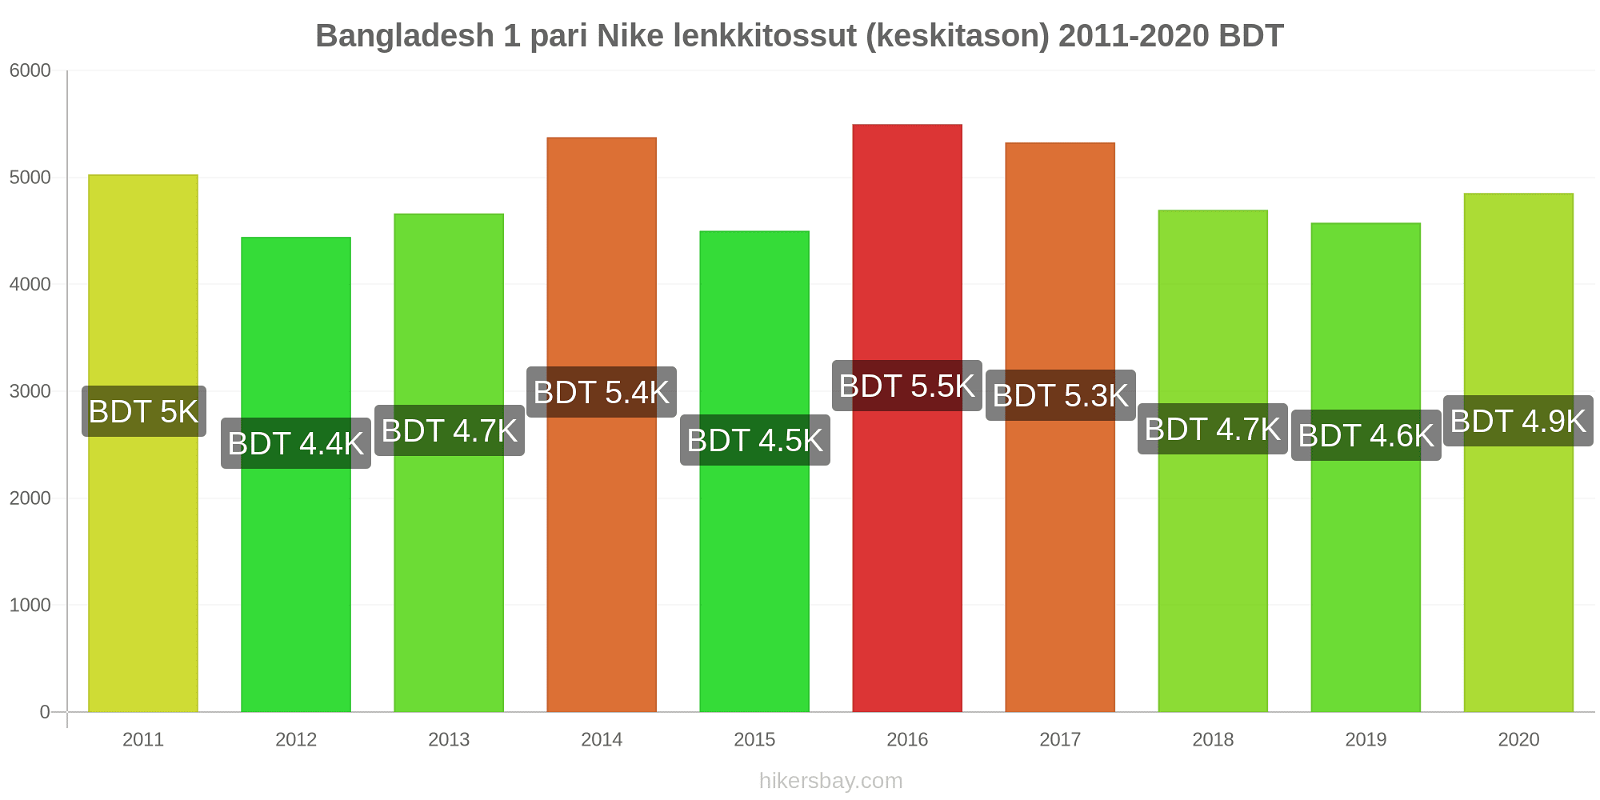 Bangladesh hintojen muutokset 1 pari Nike lenkkitossut (keskitason) hikersbay.com